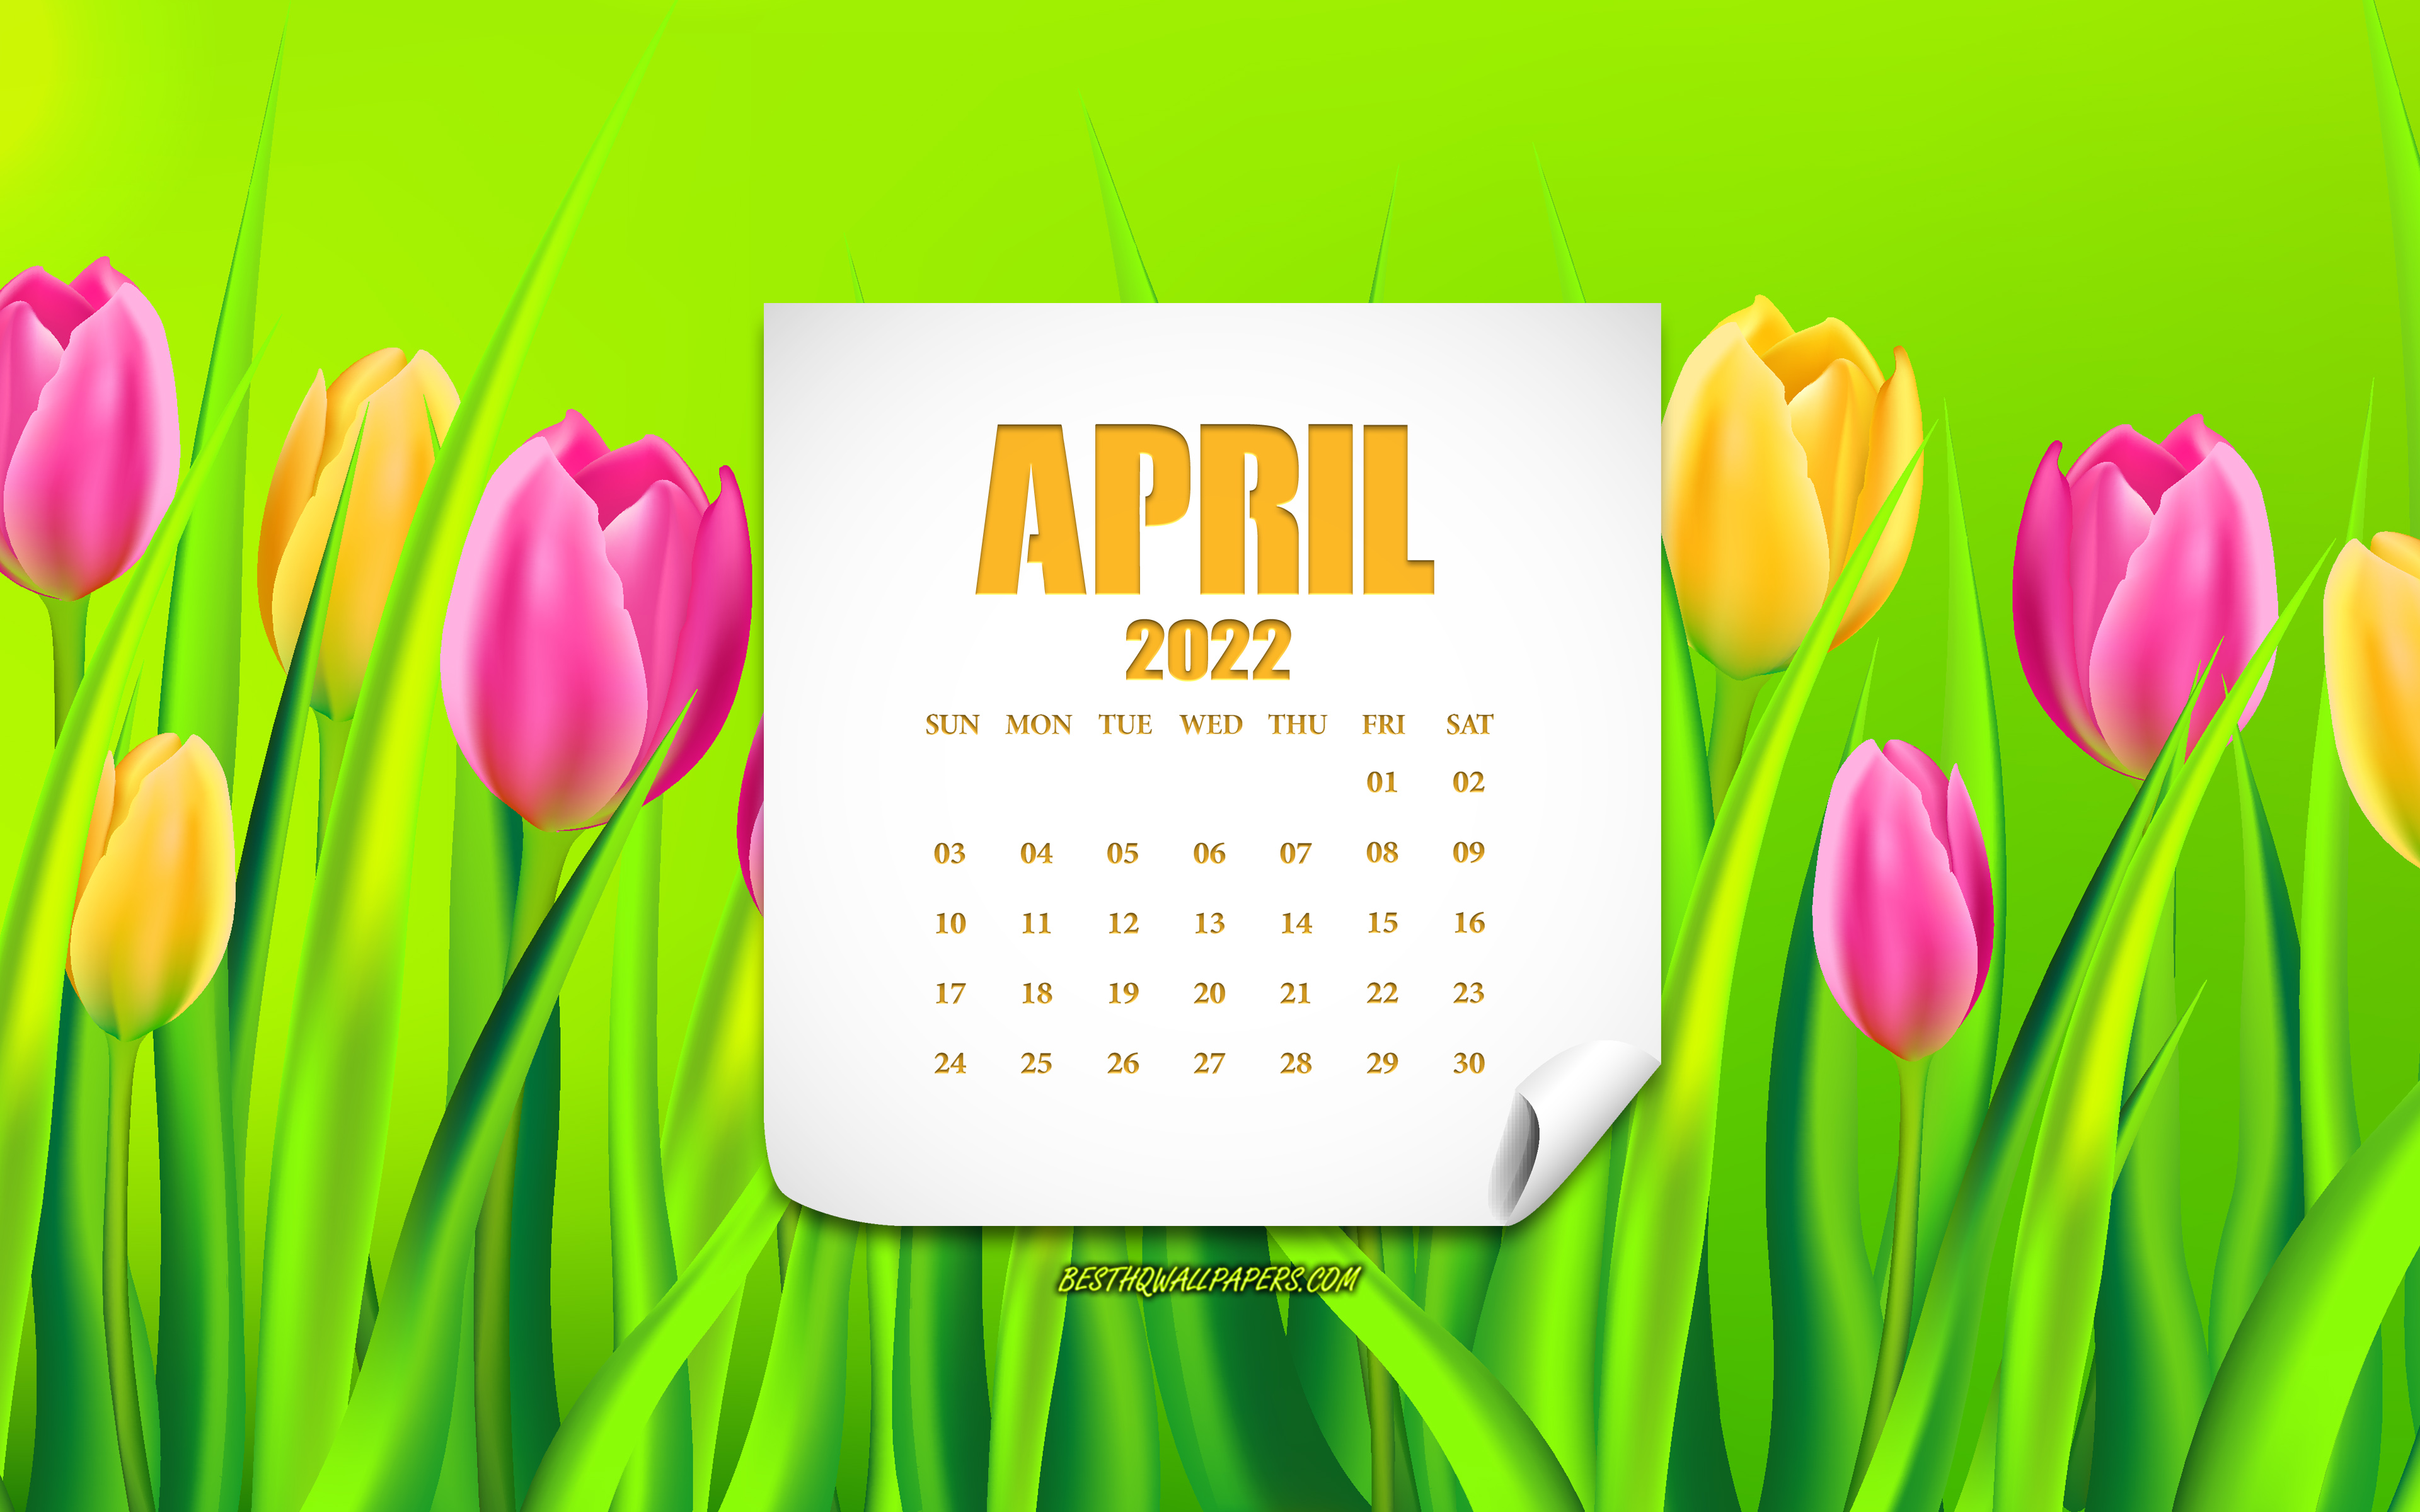 April 2019 Free Desktop CalendarWallpaper from Marmalead